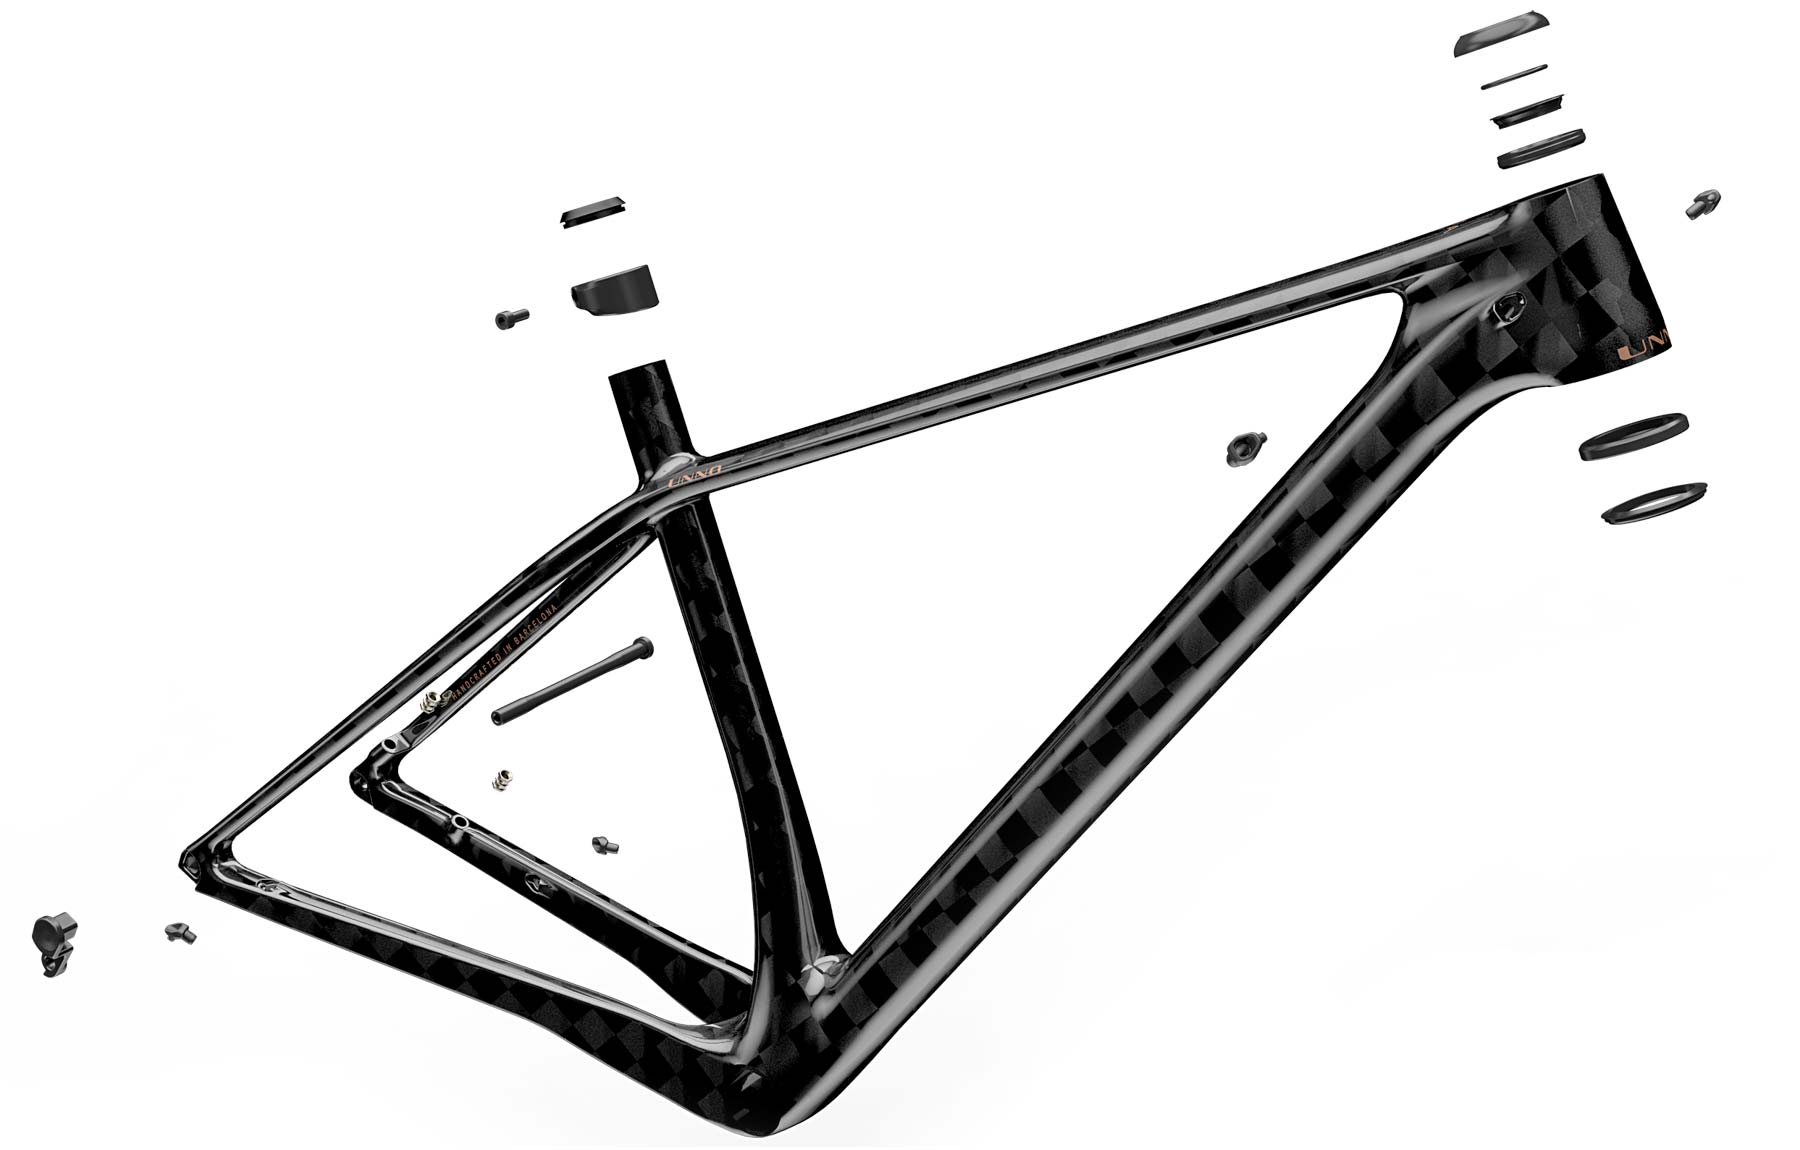 UNNO Aora ultra light carbon XC hardtail mountain bike World's Lightest XC hardtail mountain bike frame